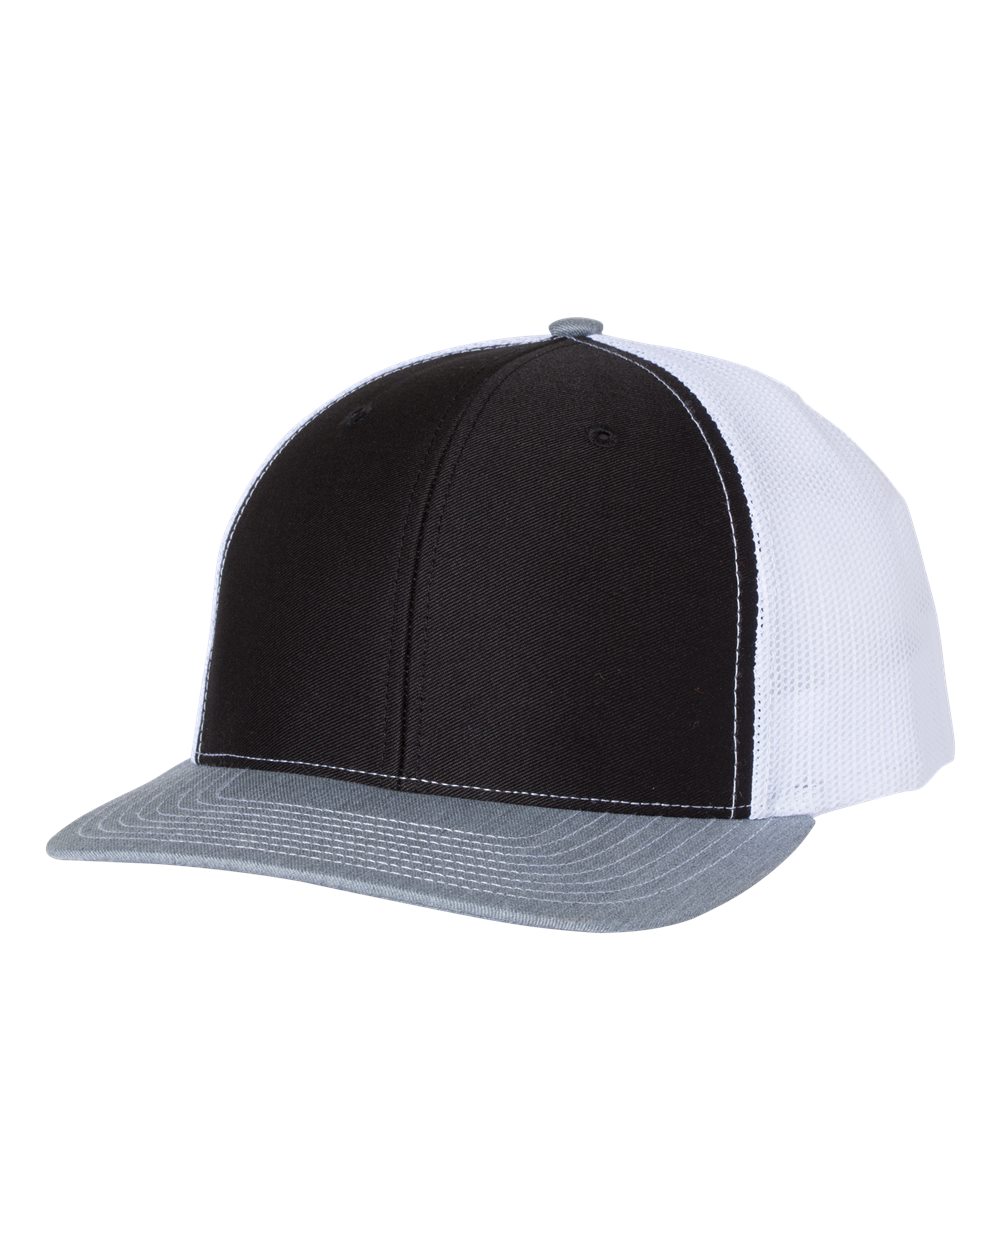 richardson cap black white heather grey